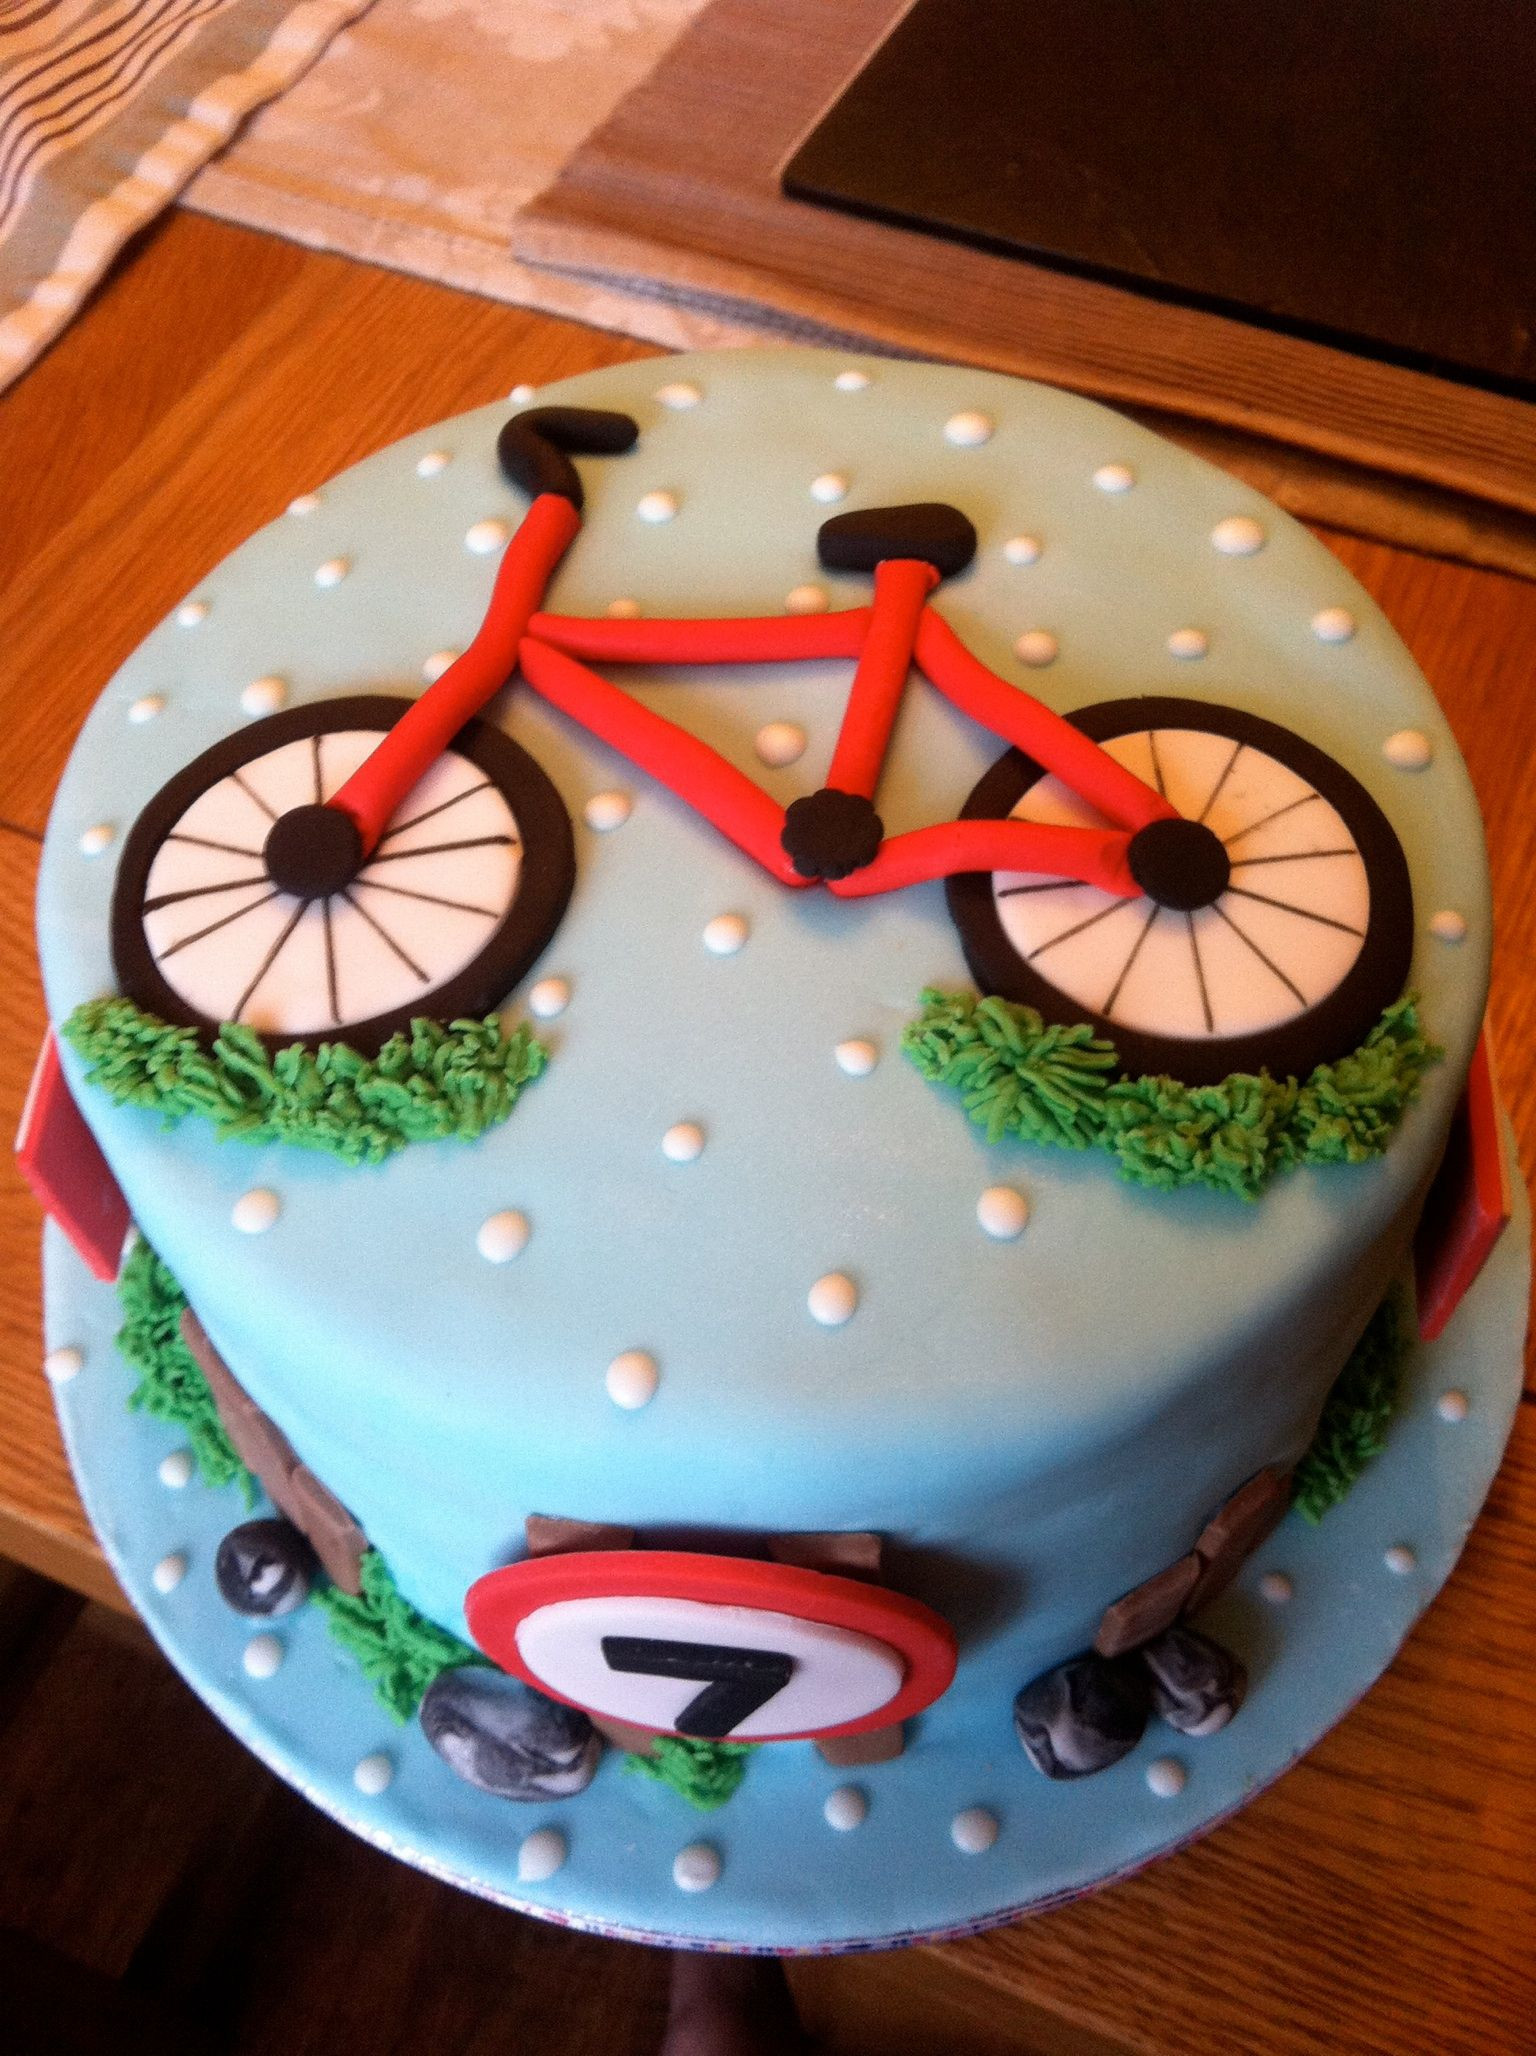 Bicycle Birthday Cake
 Bet this 7 year old loved his bike birthday cake